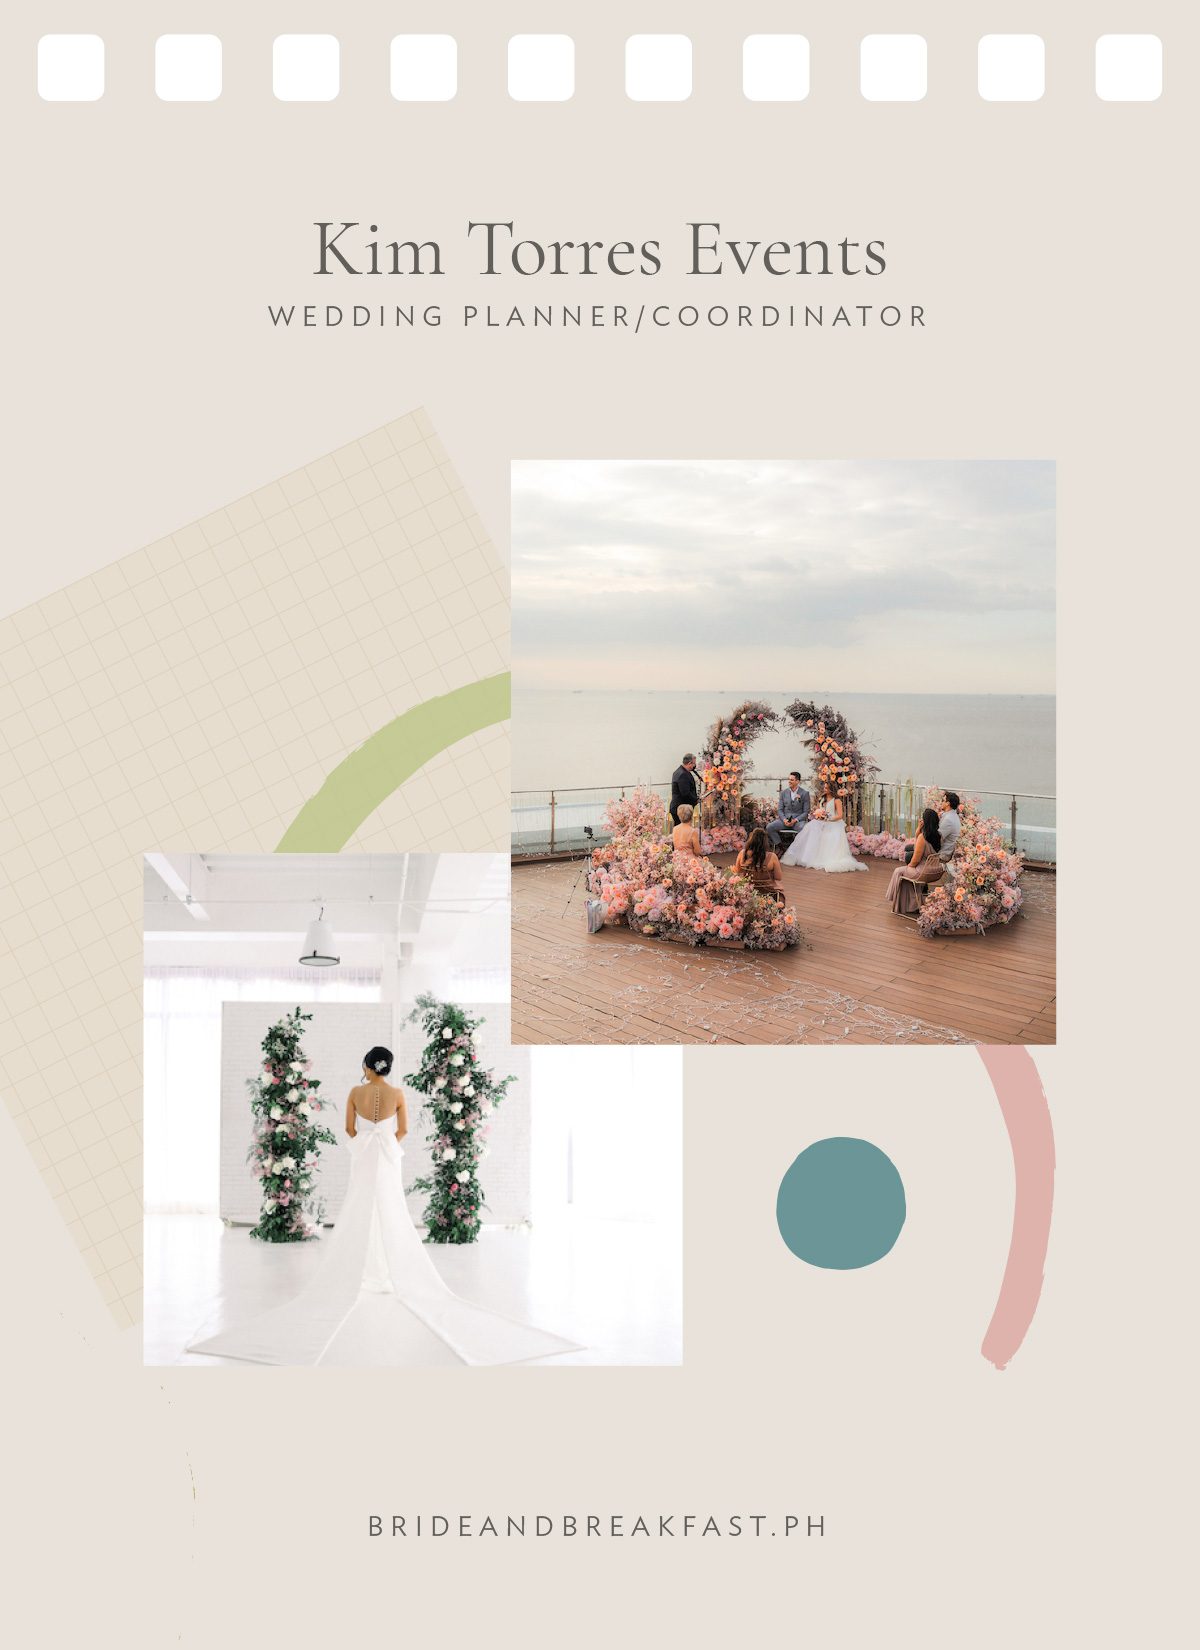 Kim Torres Events